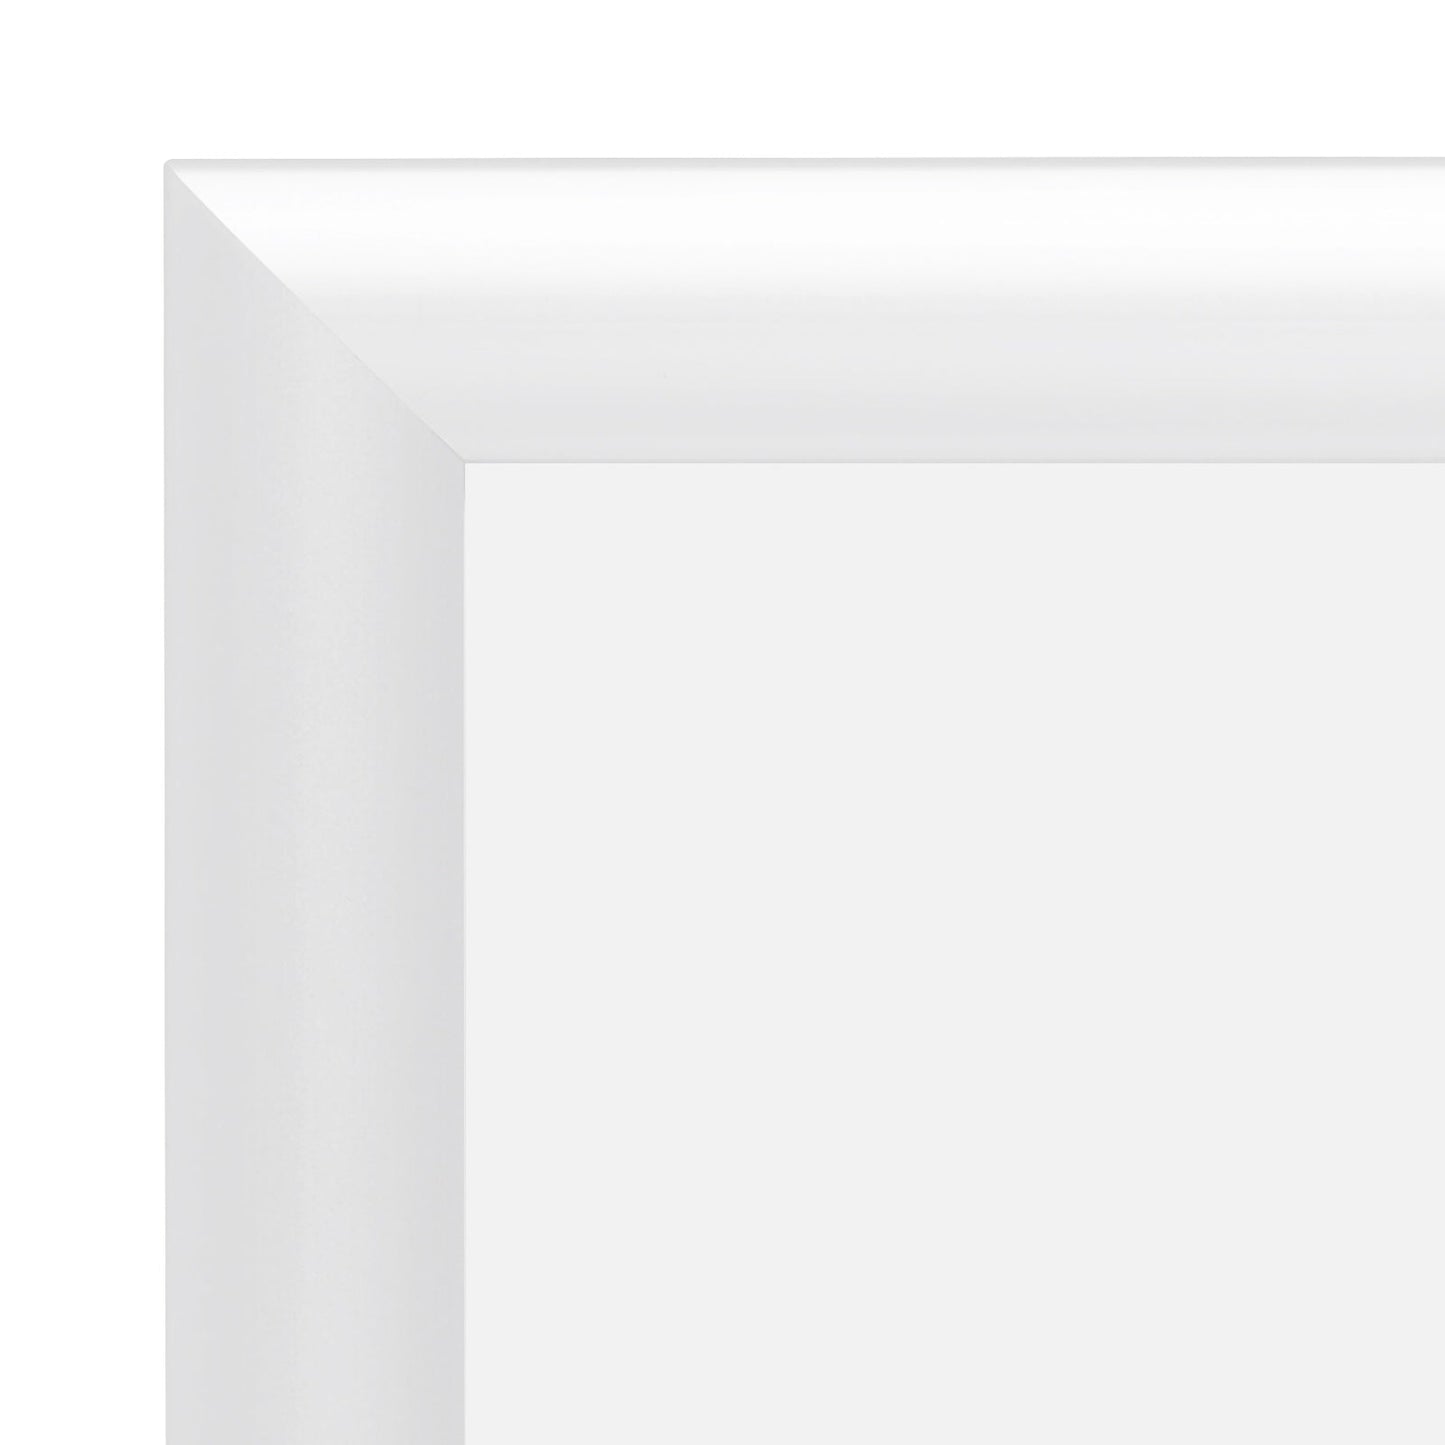 8.5x11 White SnapeZo® Poster Snap Frame 1" - Snap Frames Direct